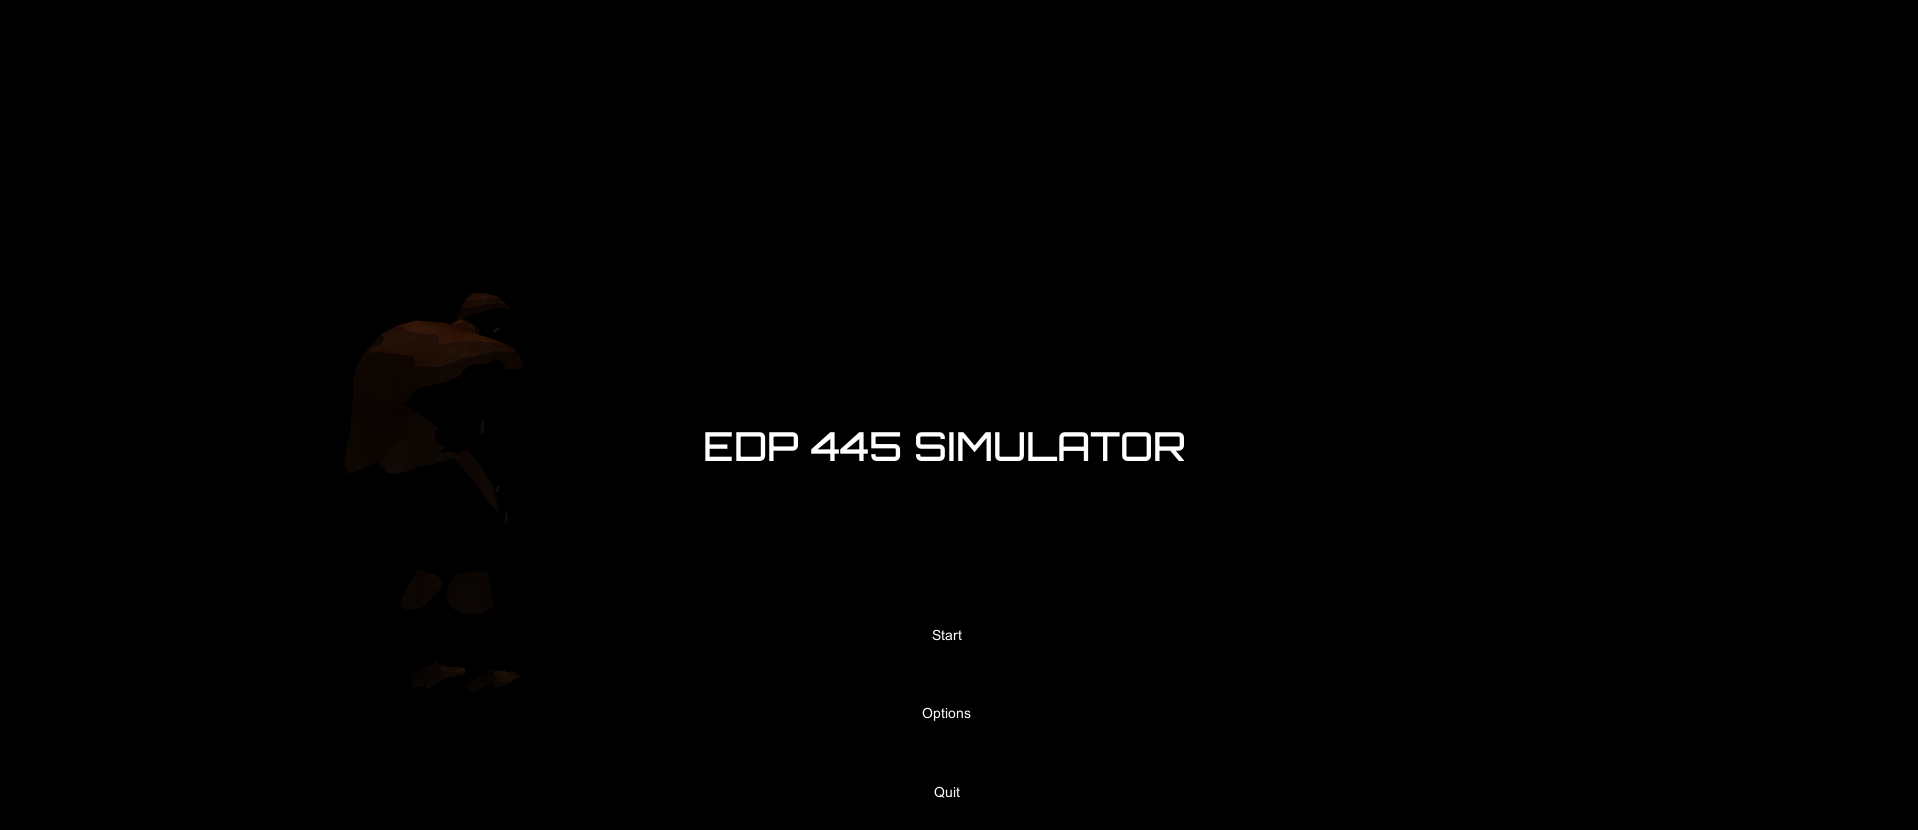 EDP445 Cupcake Full Complete Audio Series 